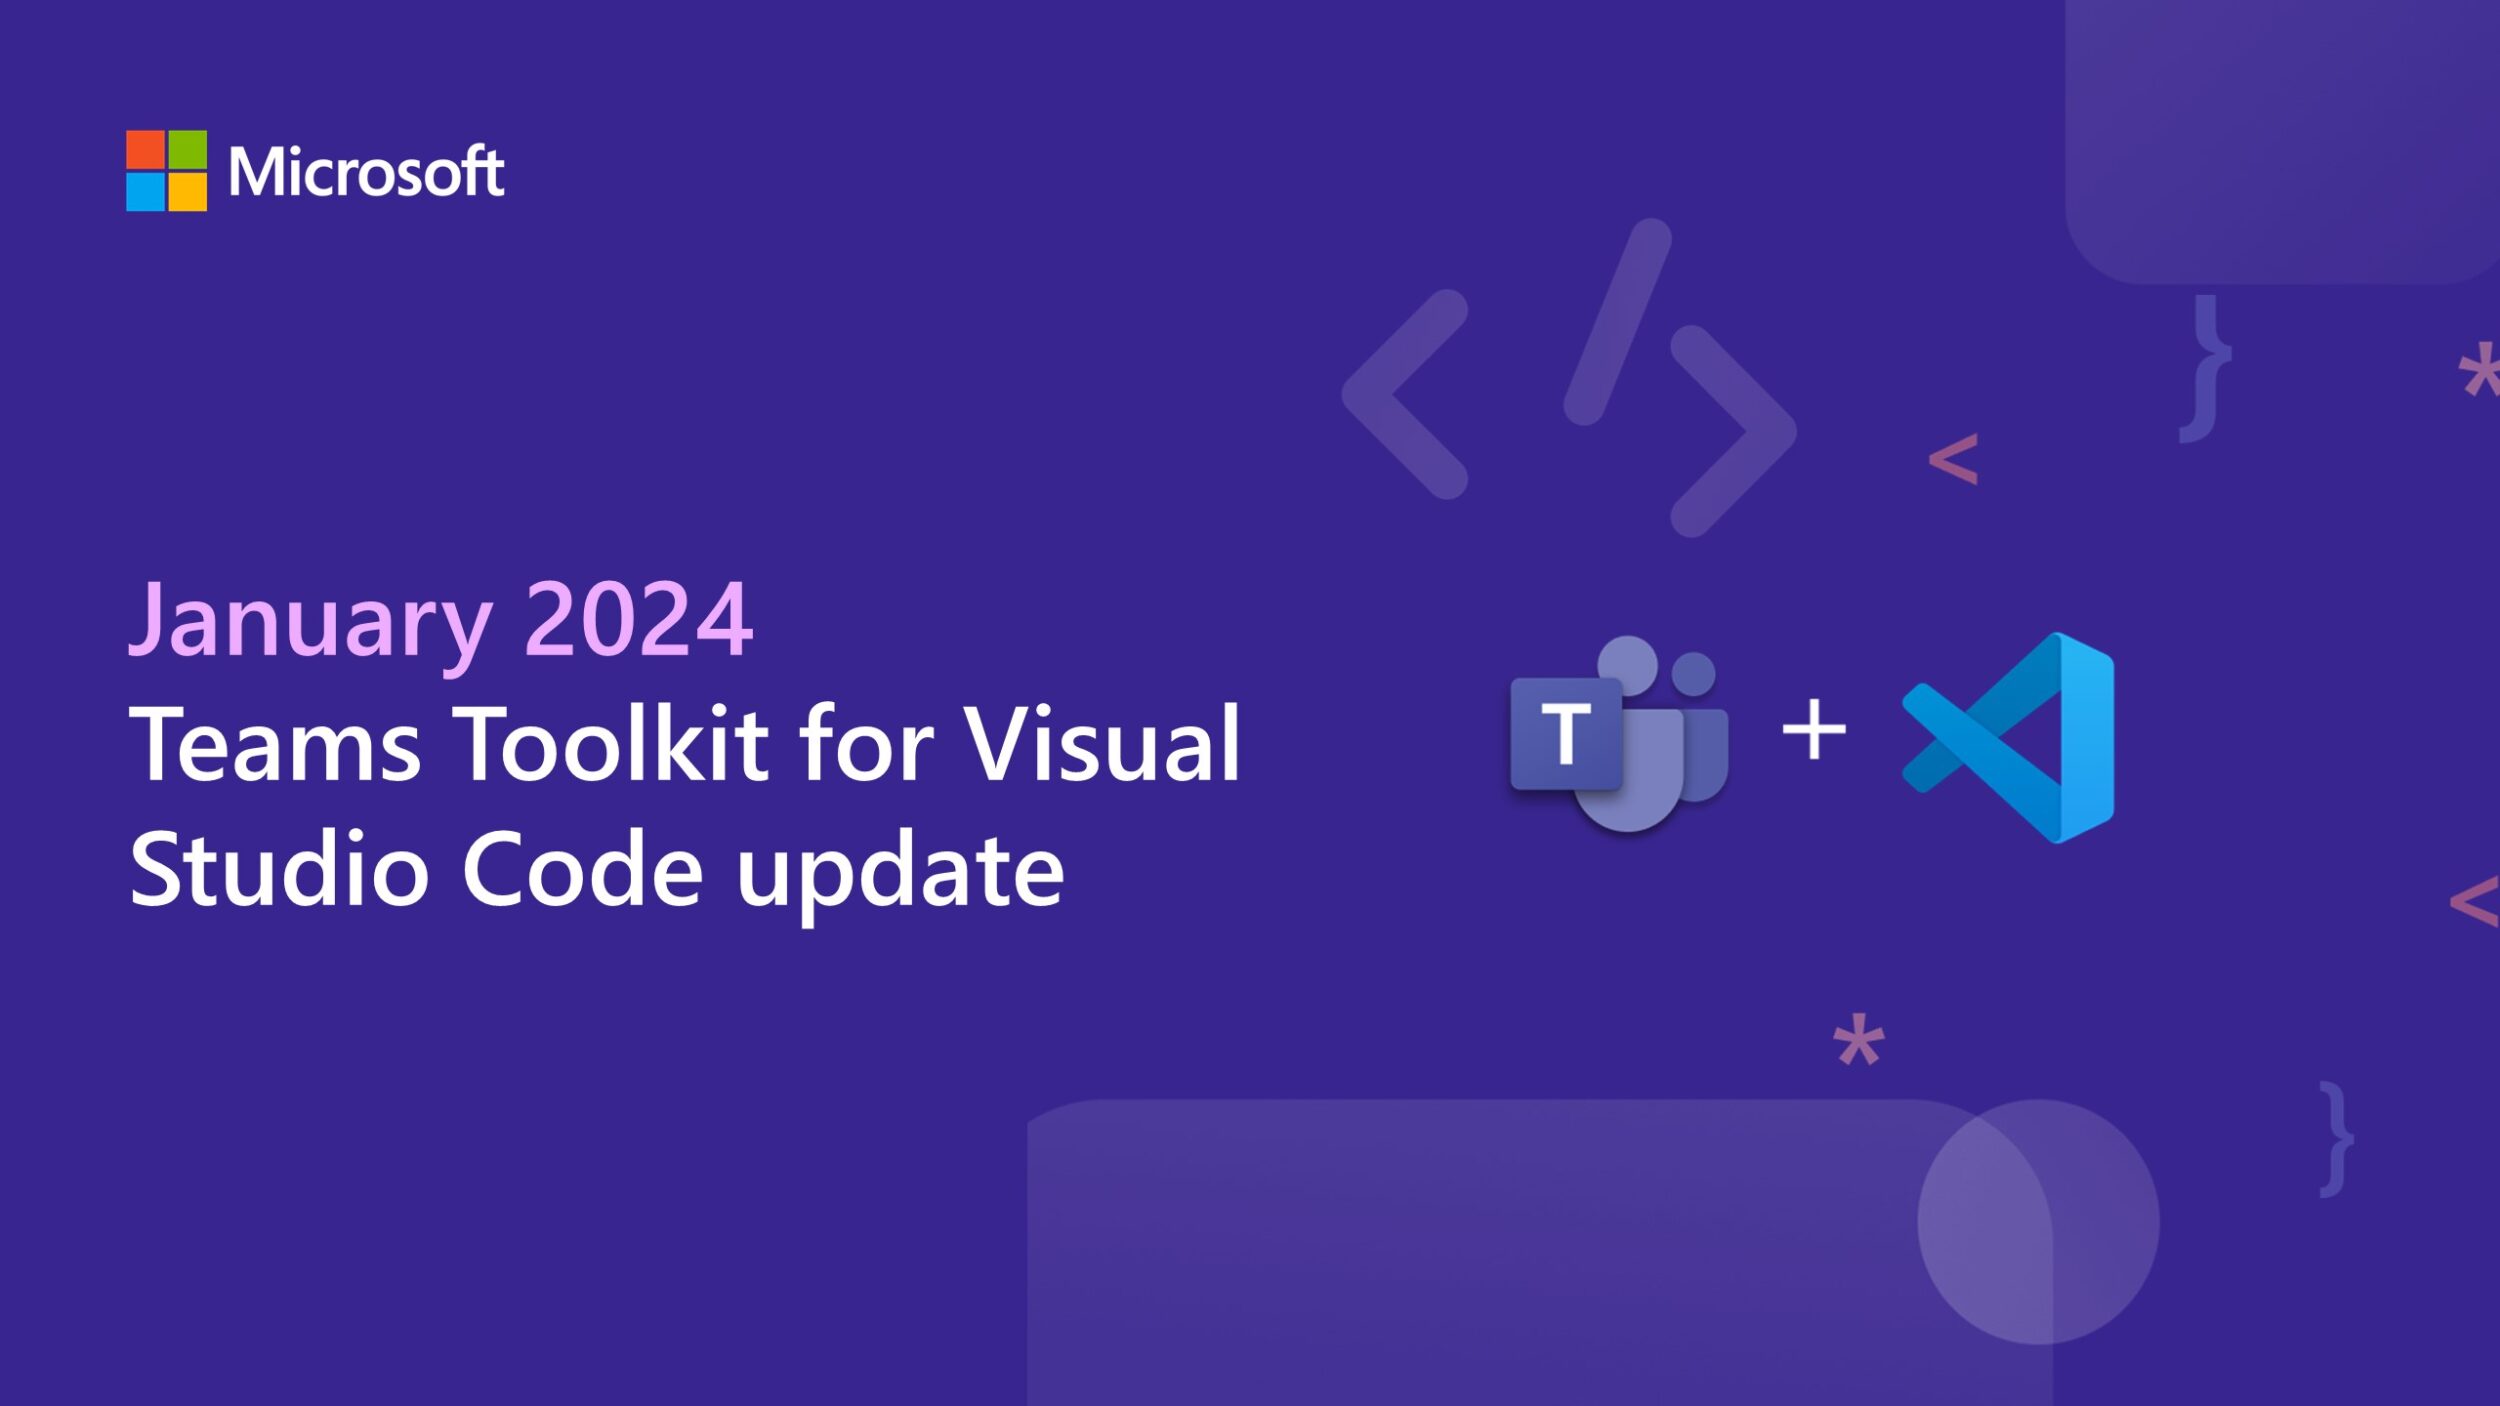 Teams Toolkit for Visual Studio Code update – January 2024